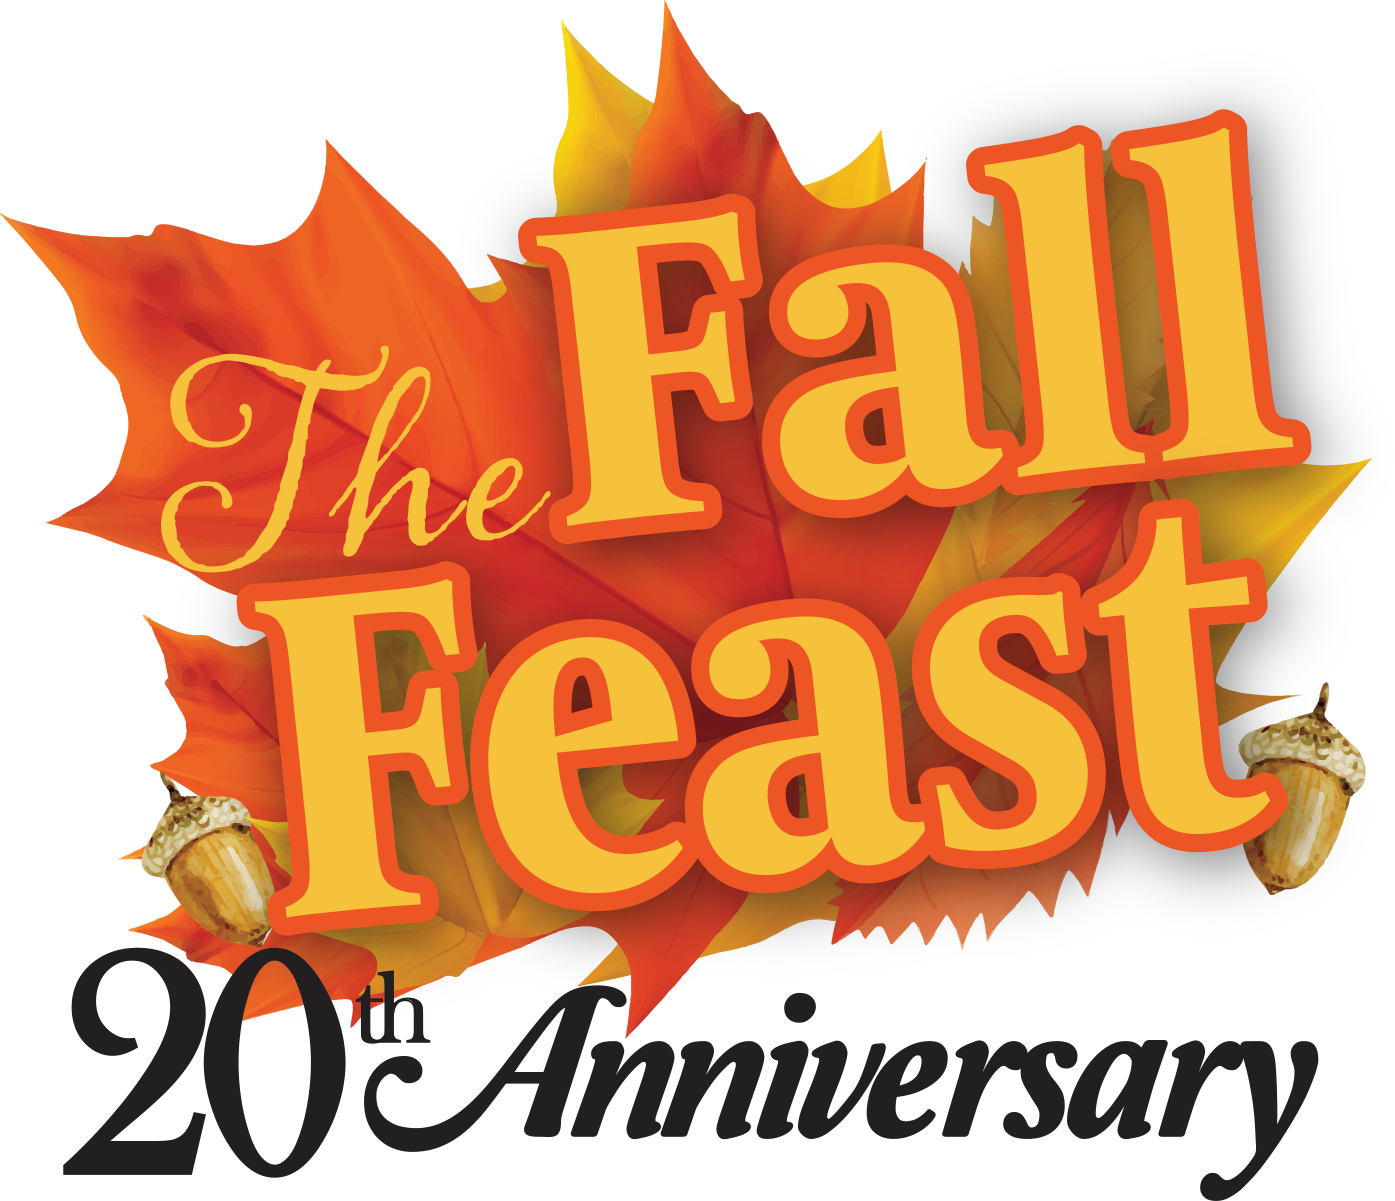 The Fall Feast